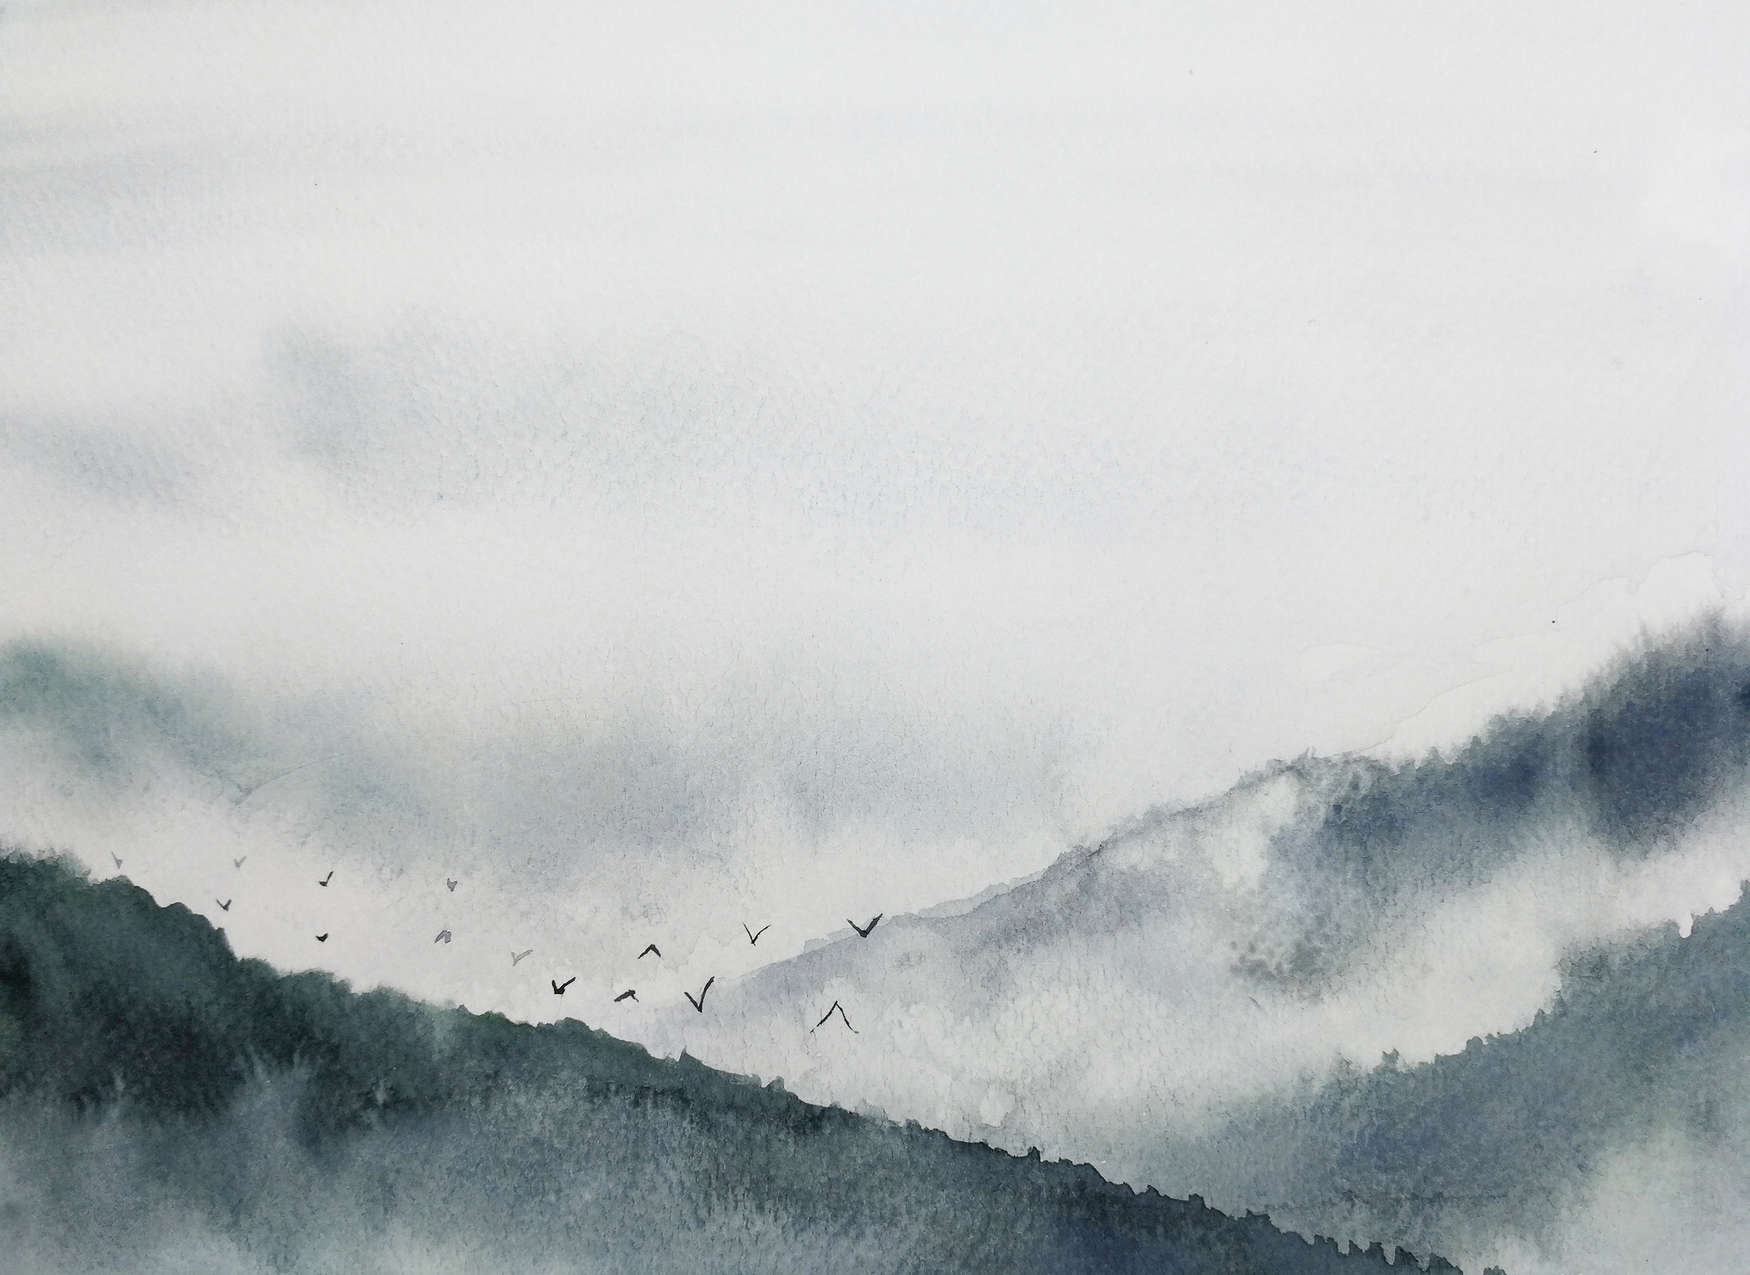             Paesaggio nebbioso in stile pittura - Grigio, nero
        